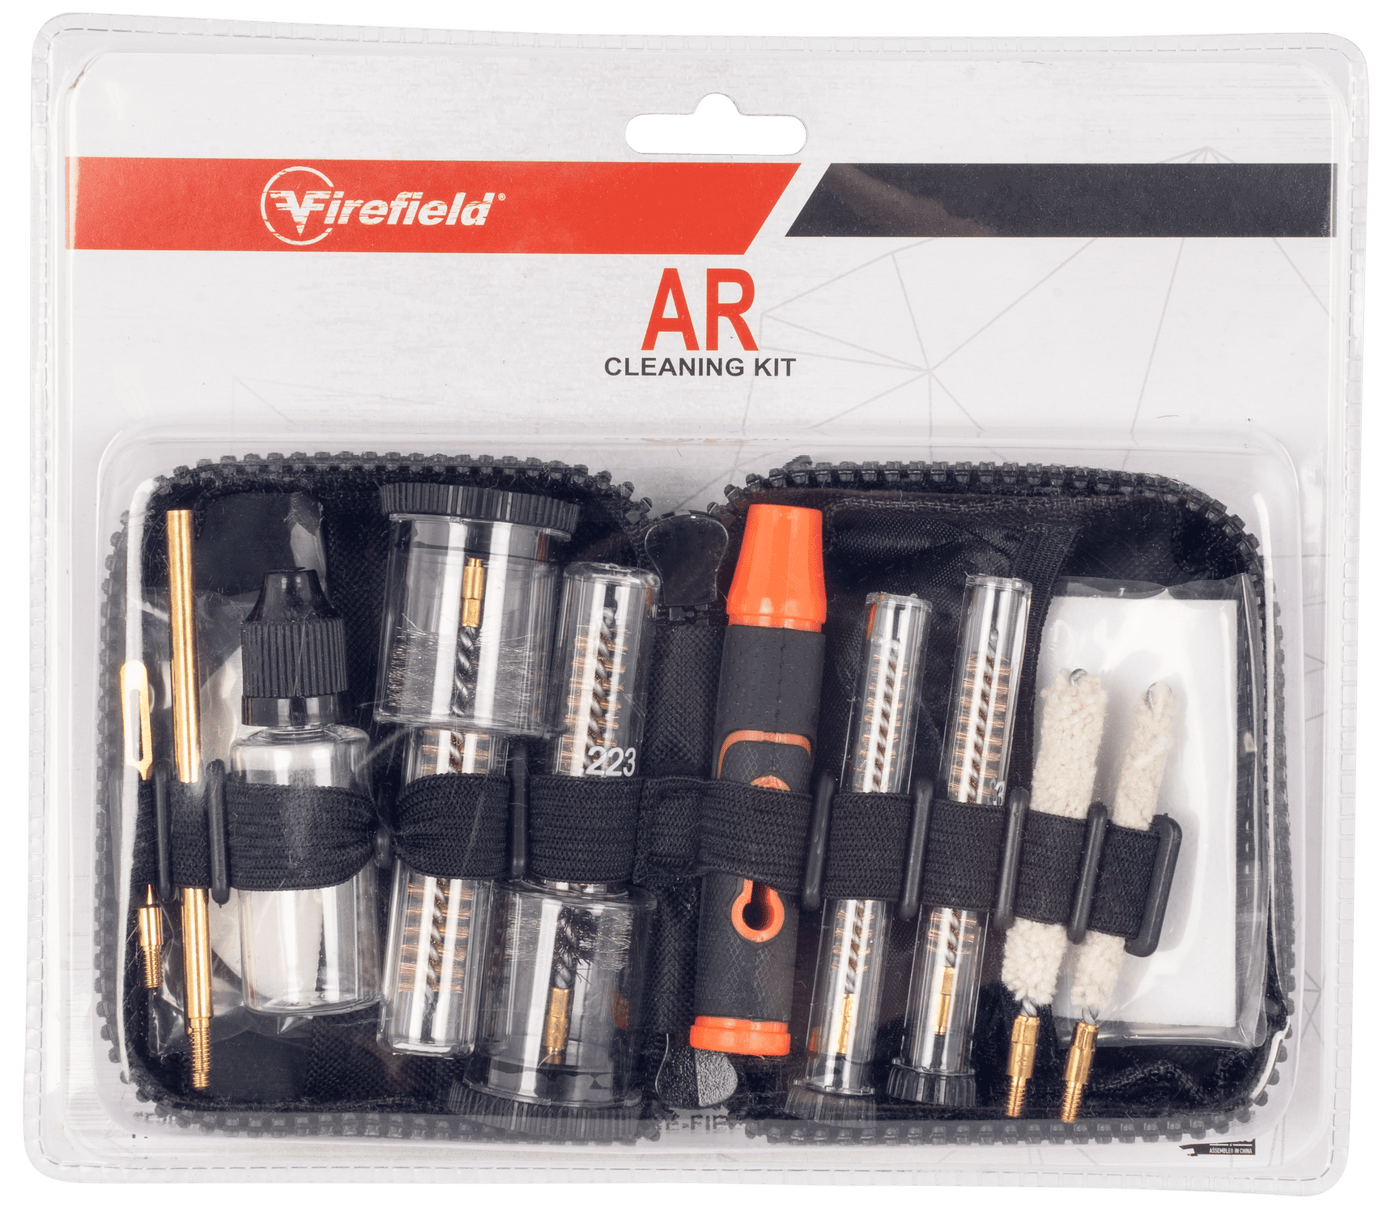 Firefield Firefield Ar Cleaning Kit, Firefield Ff38000   Cleaning Kit 223/308 Gun Care